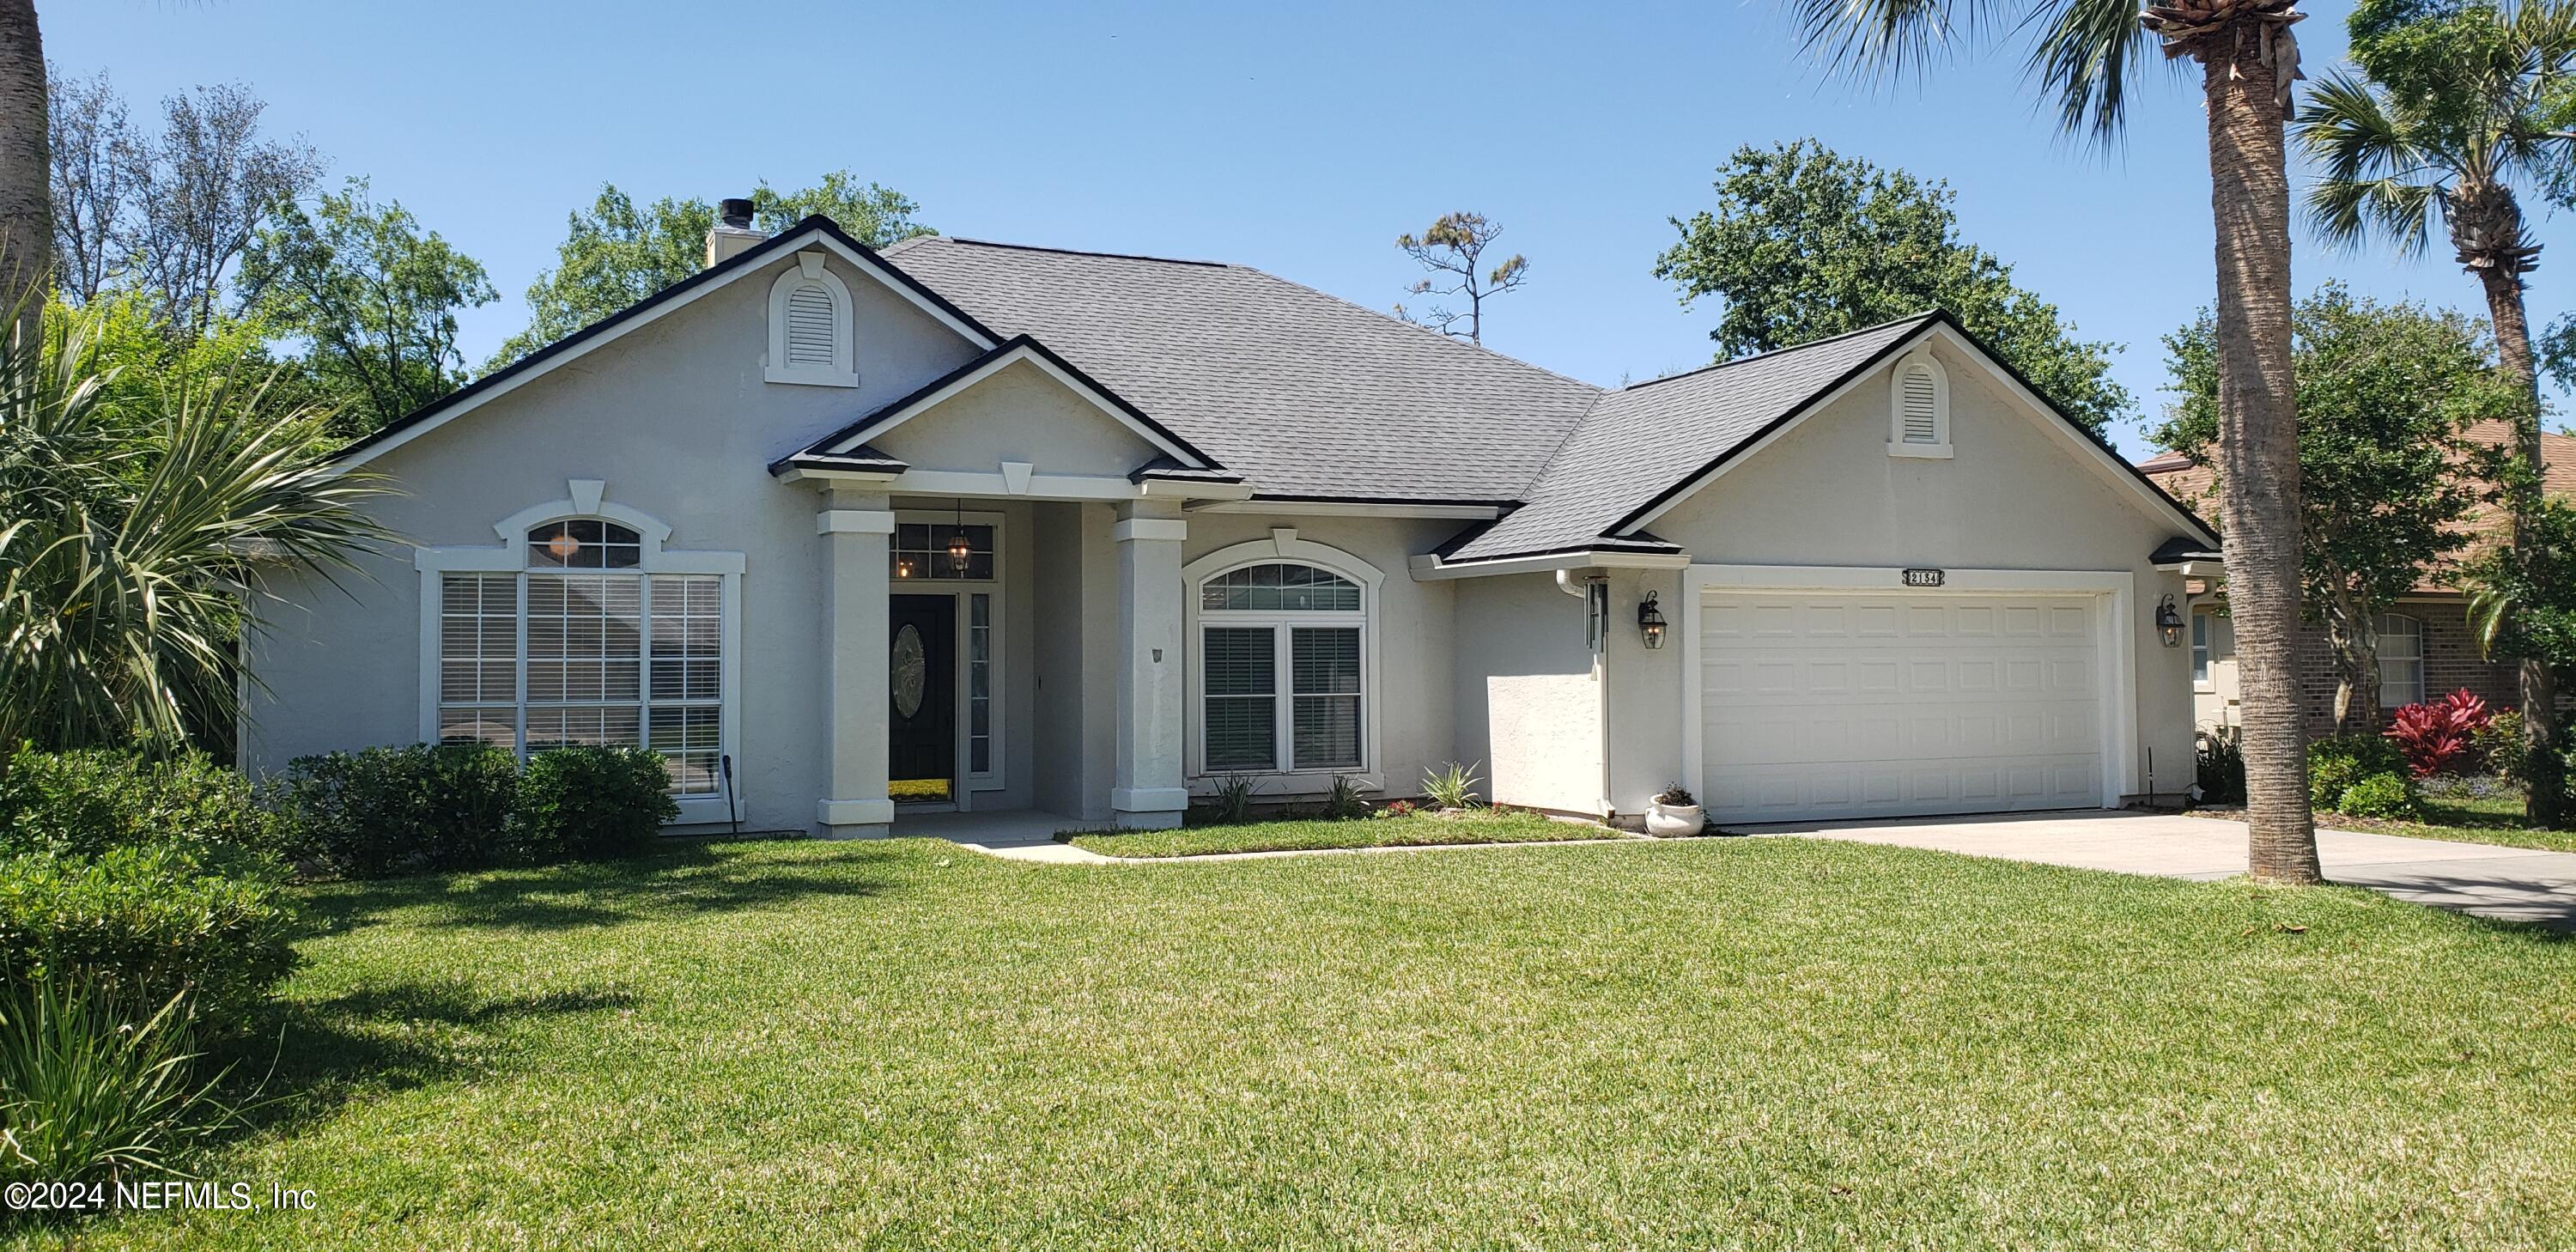 Jacksonville, FL home for sale located at 2134 GRASSY BASIN Court, Jacksonville, FL 32224